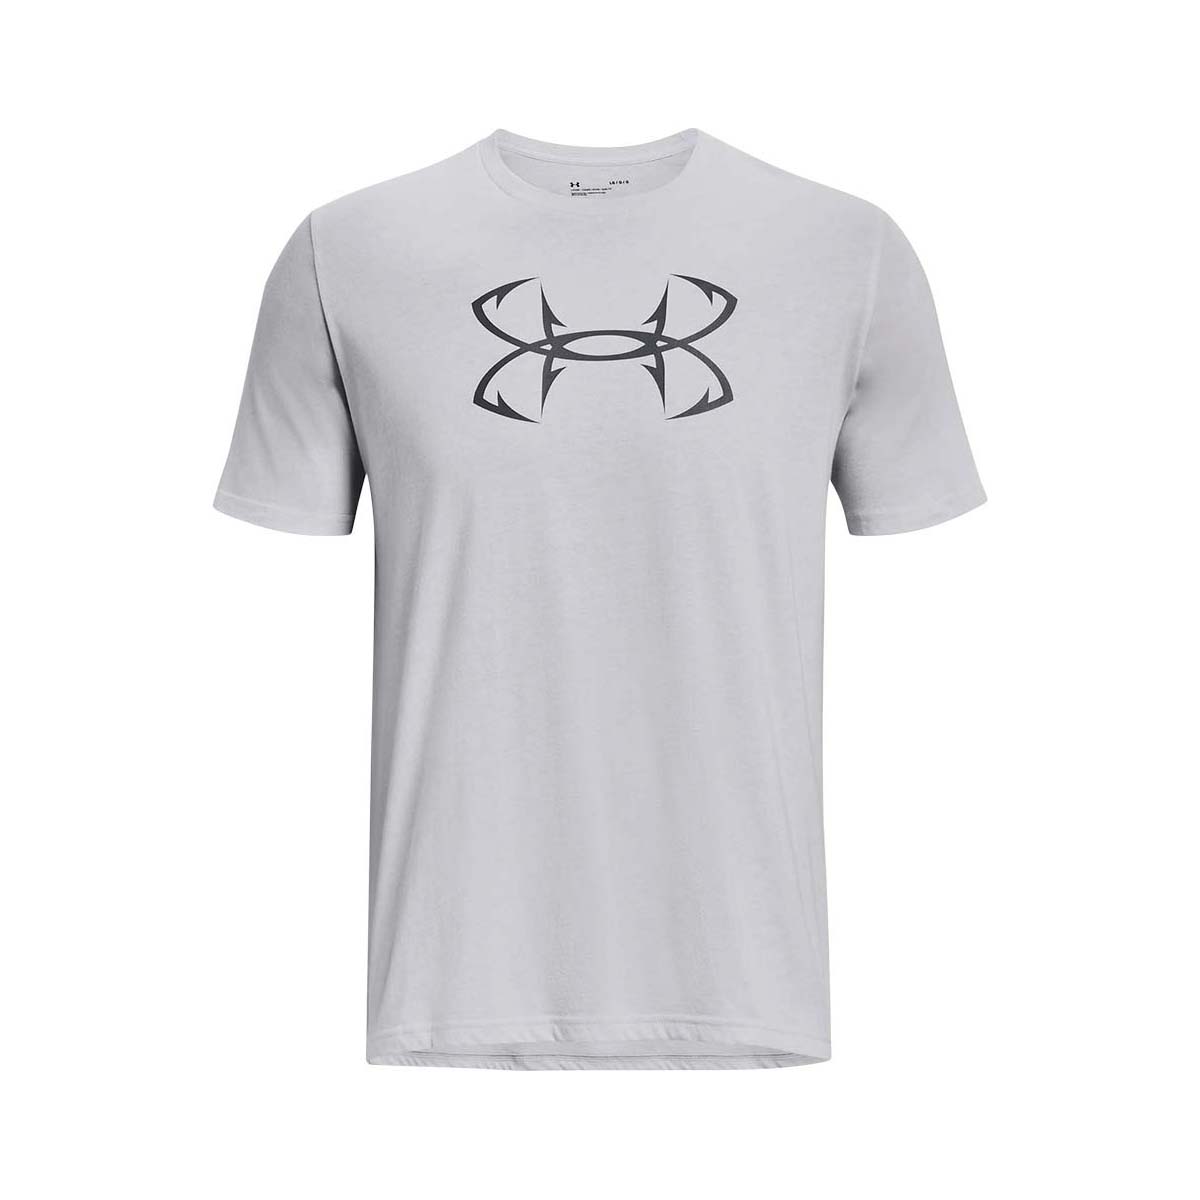 Under Armour Men's Fish Hook Logo Short Sleeve Tee XL